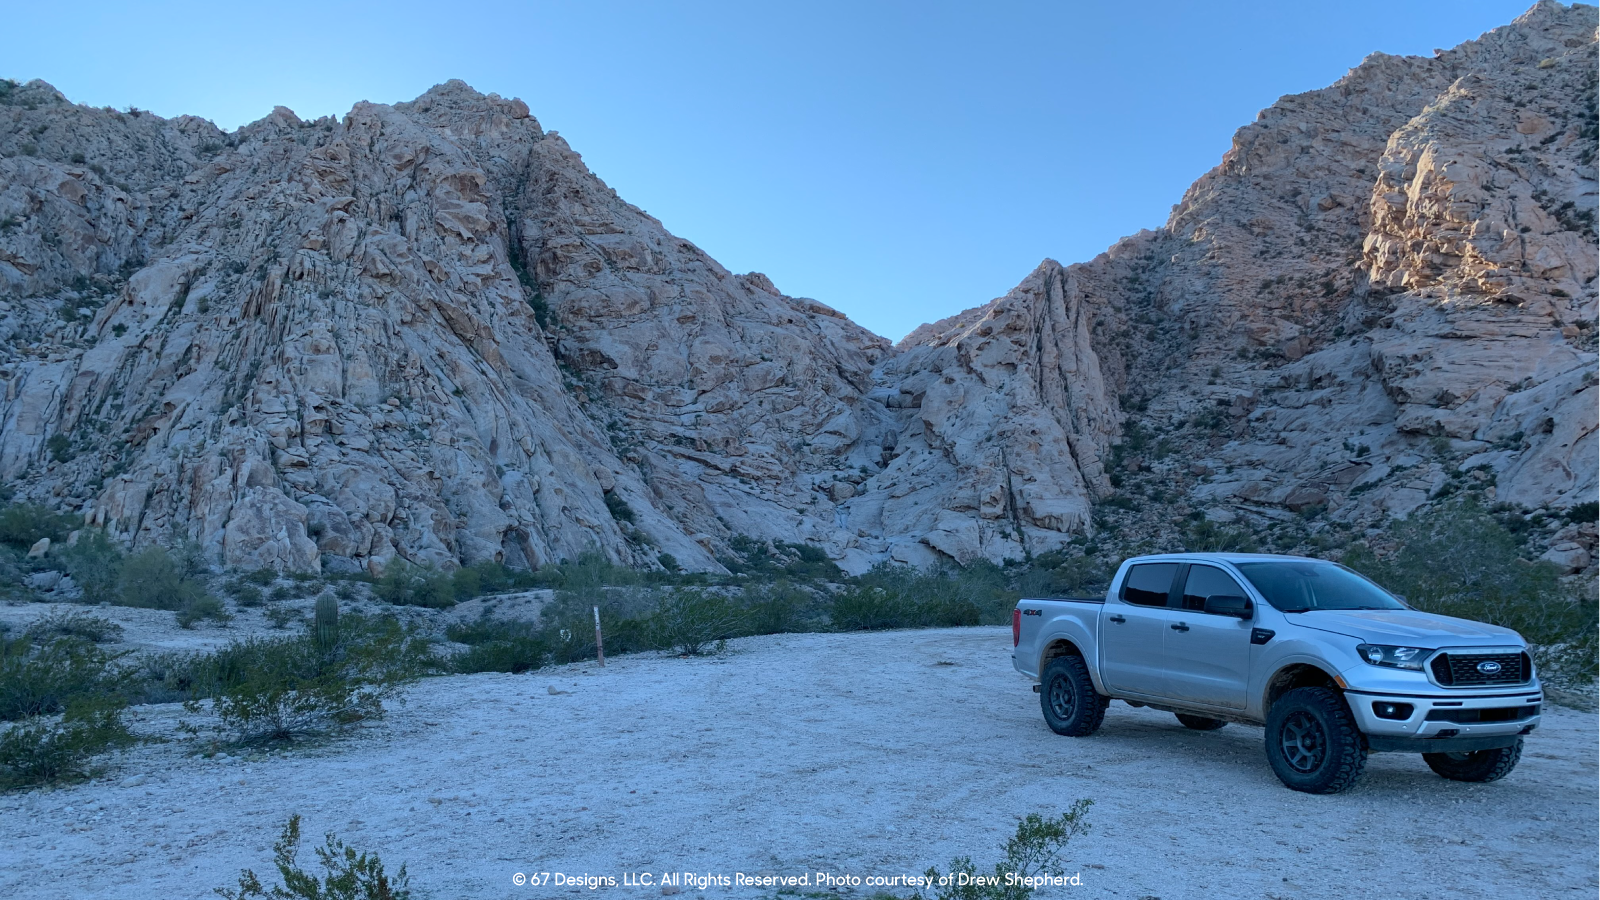 Ford Ranger overlanding by mountain